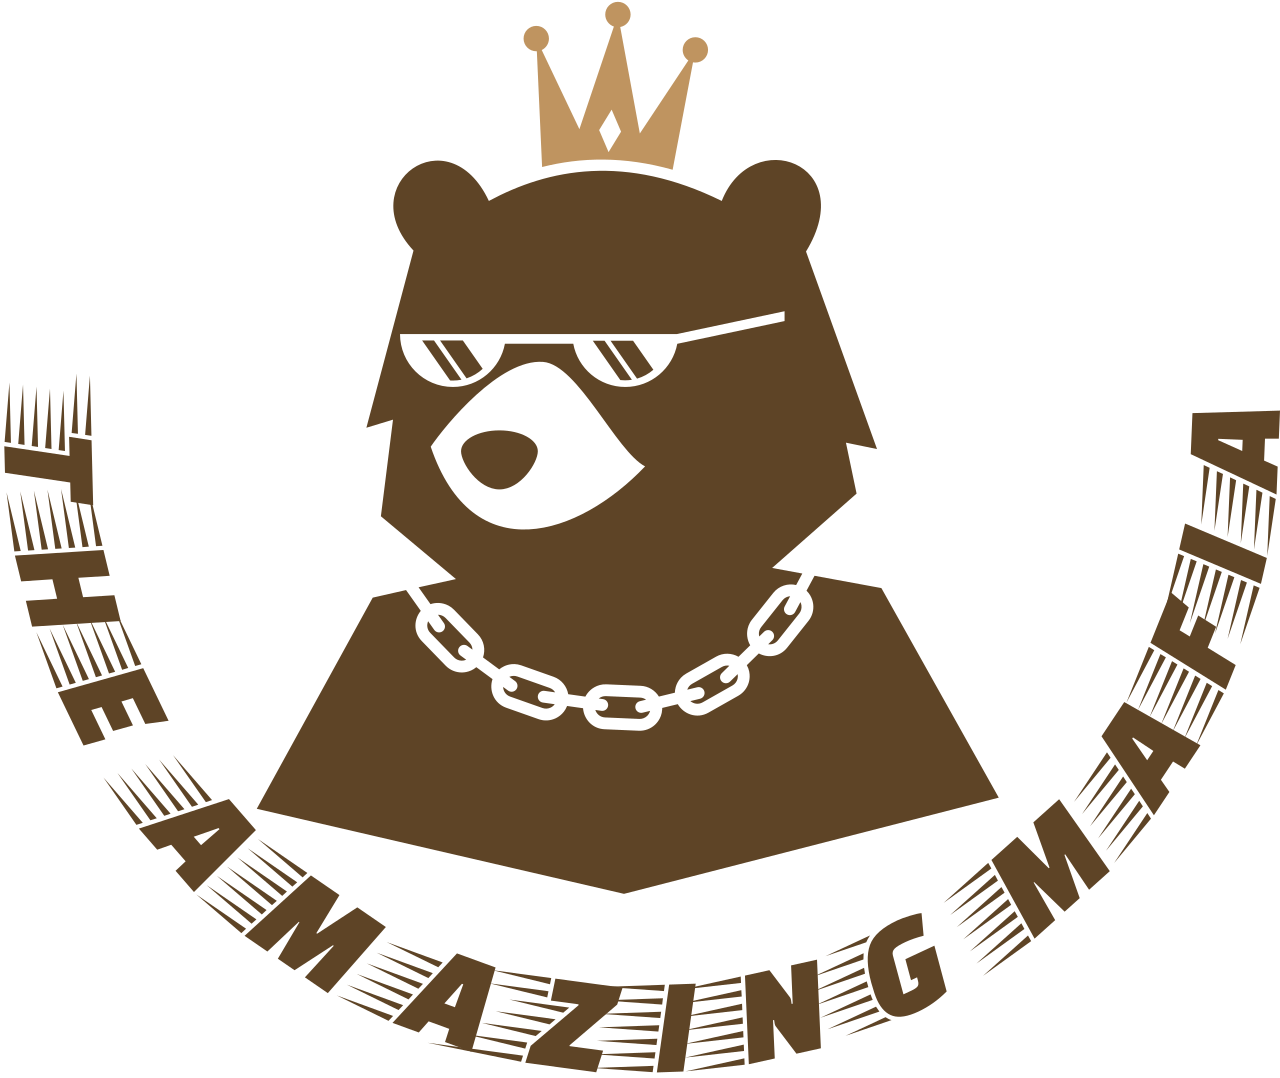 THE AMAZING MAFIA's logo